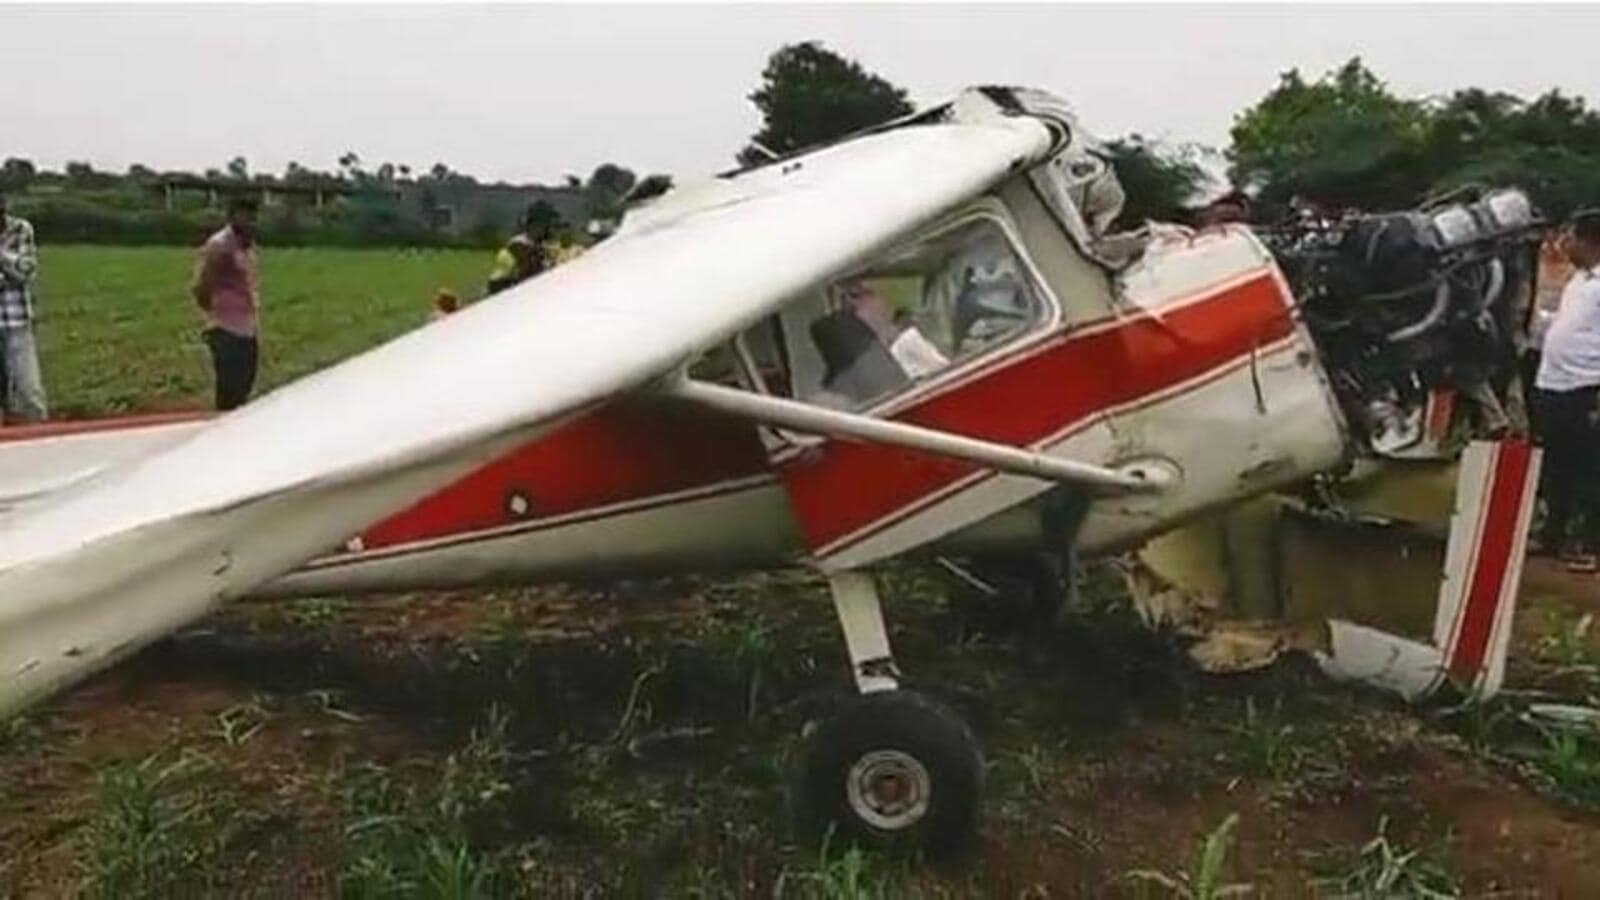 Virden Plane Crash Victim ID'd